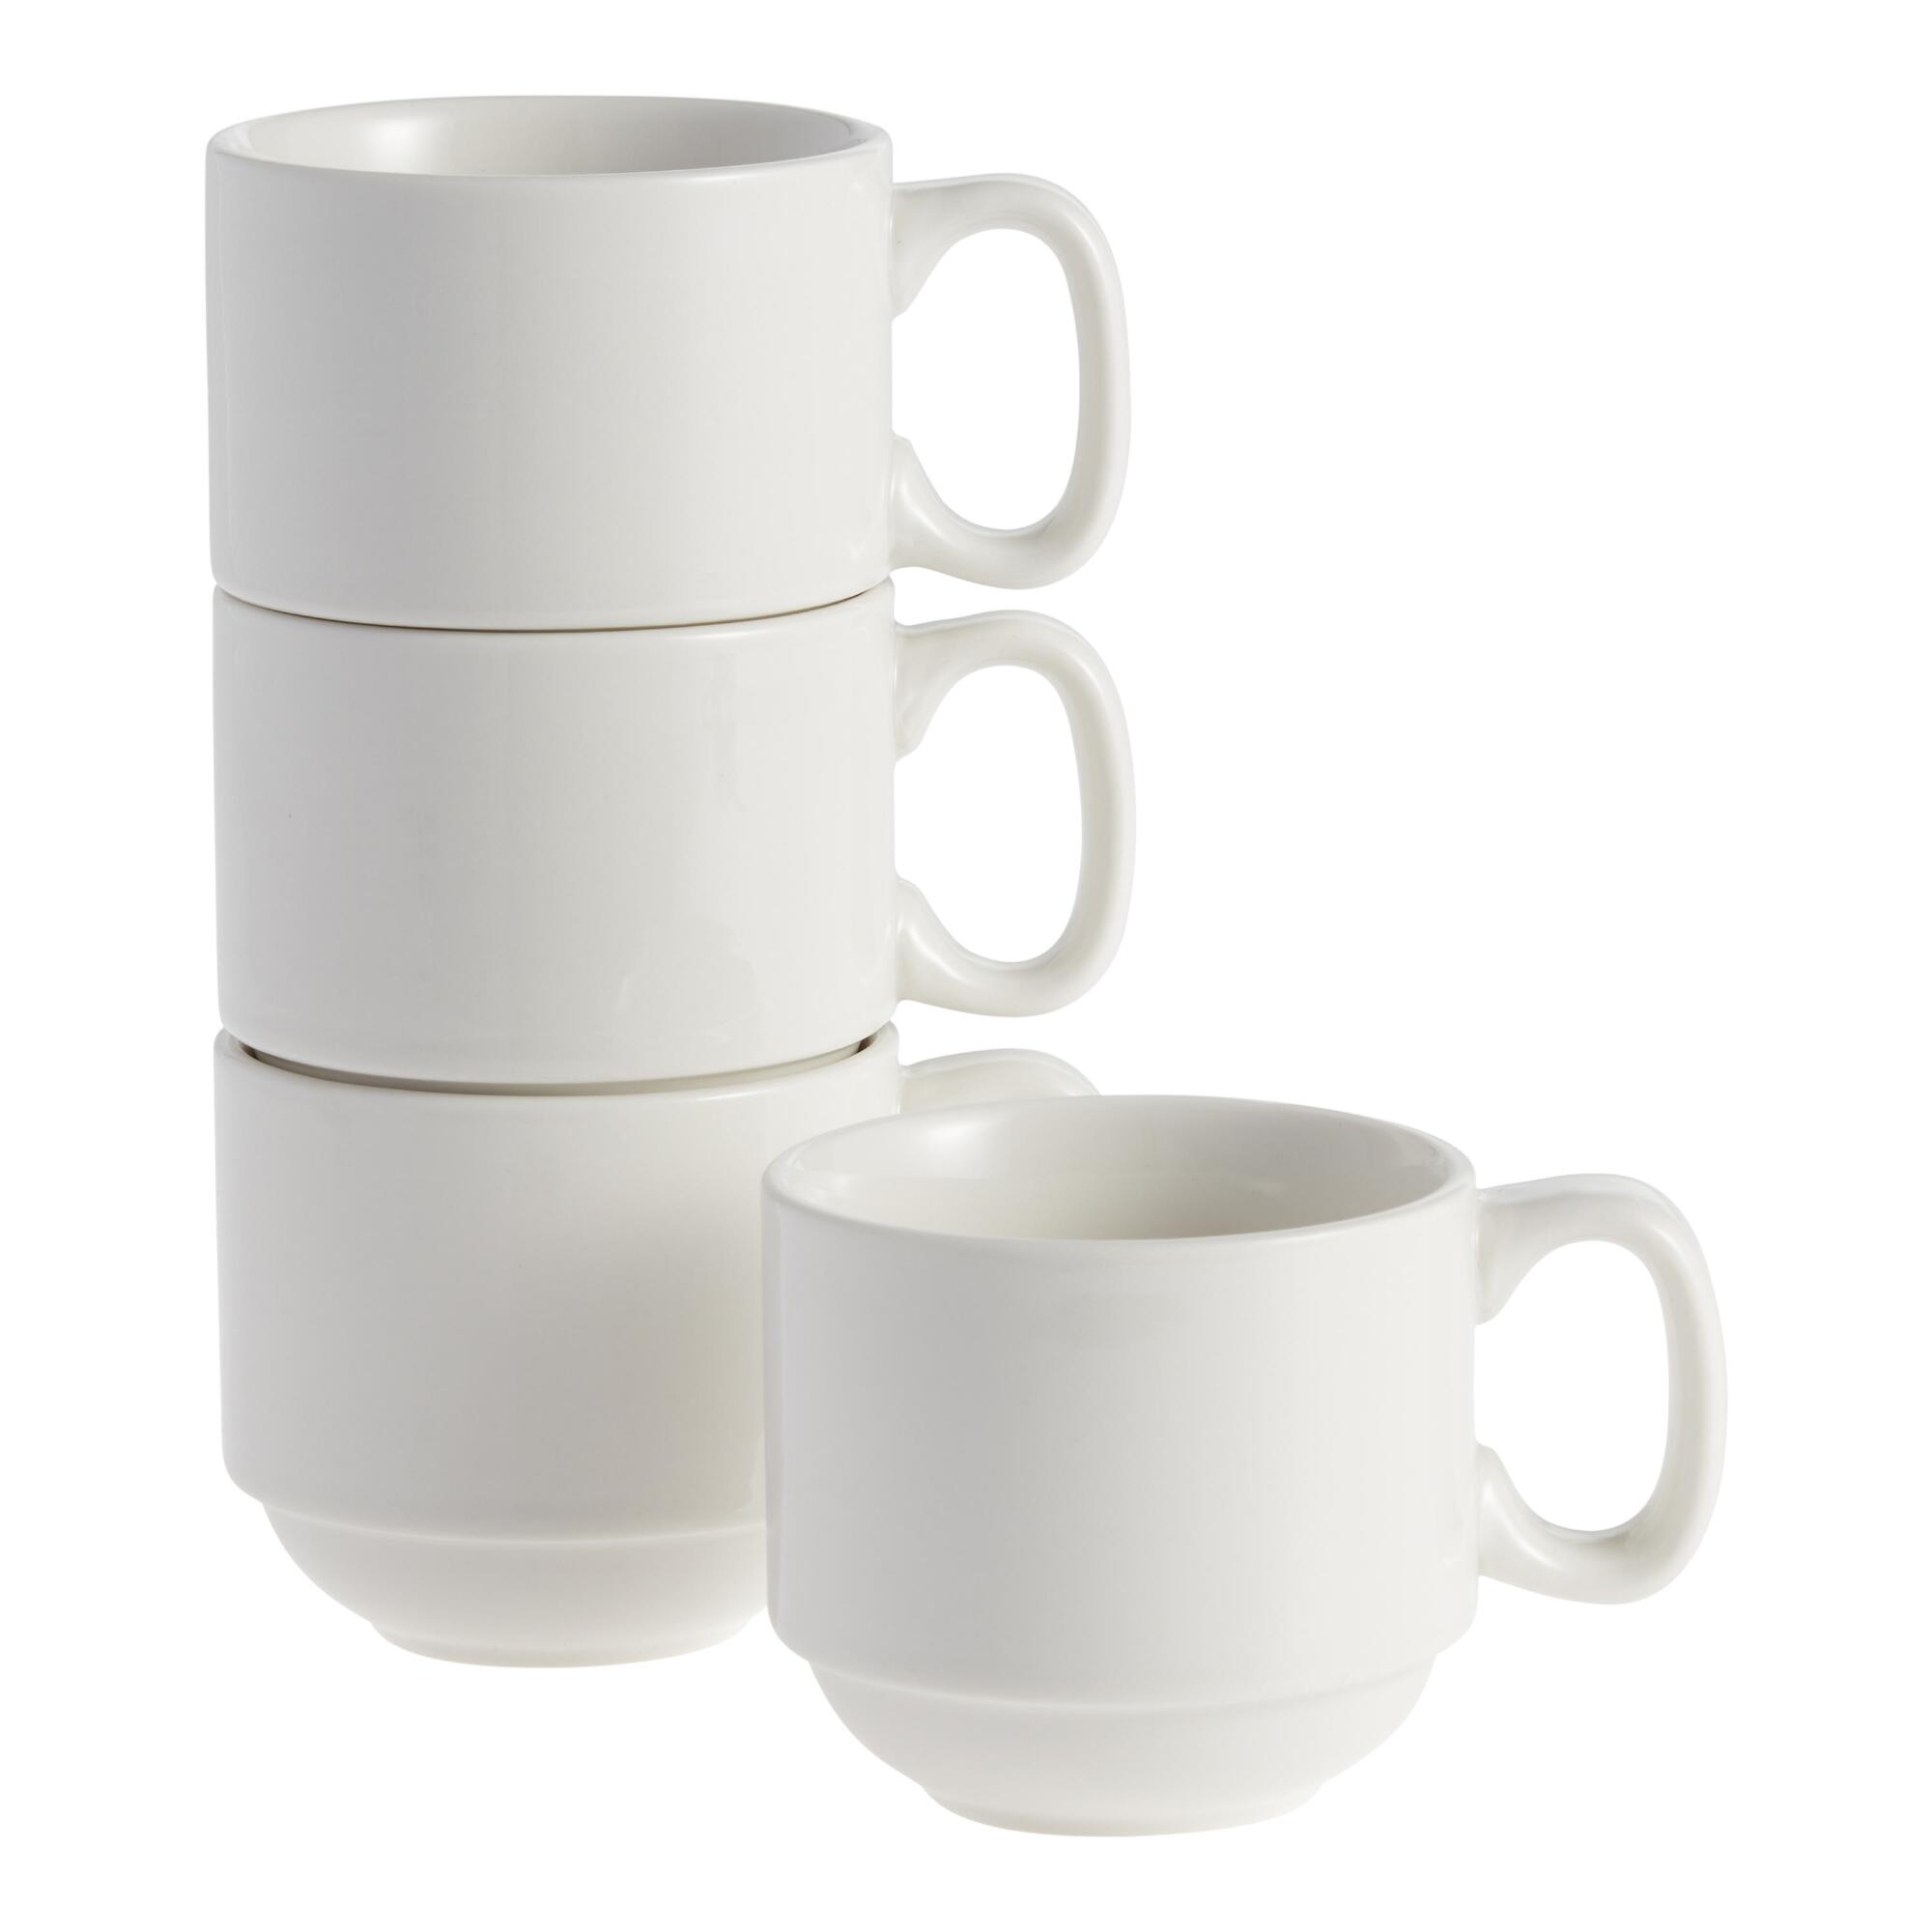 Natural White Porcelain Stacked 4 Piece Mug Set by World Market